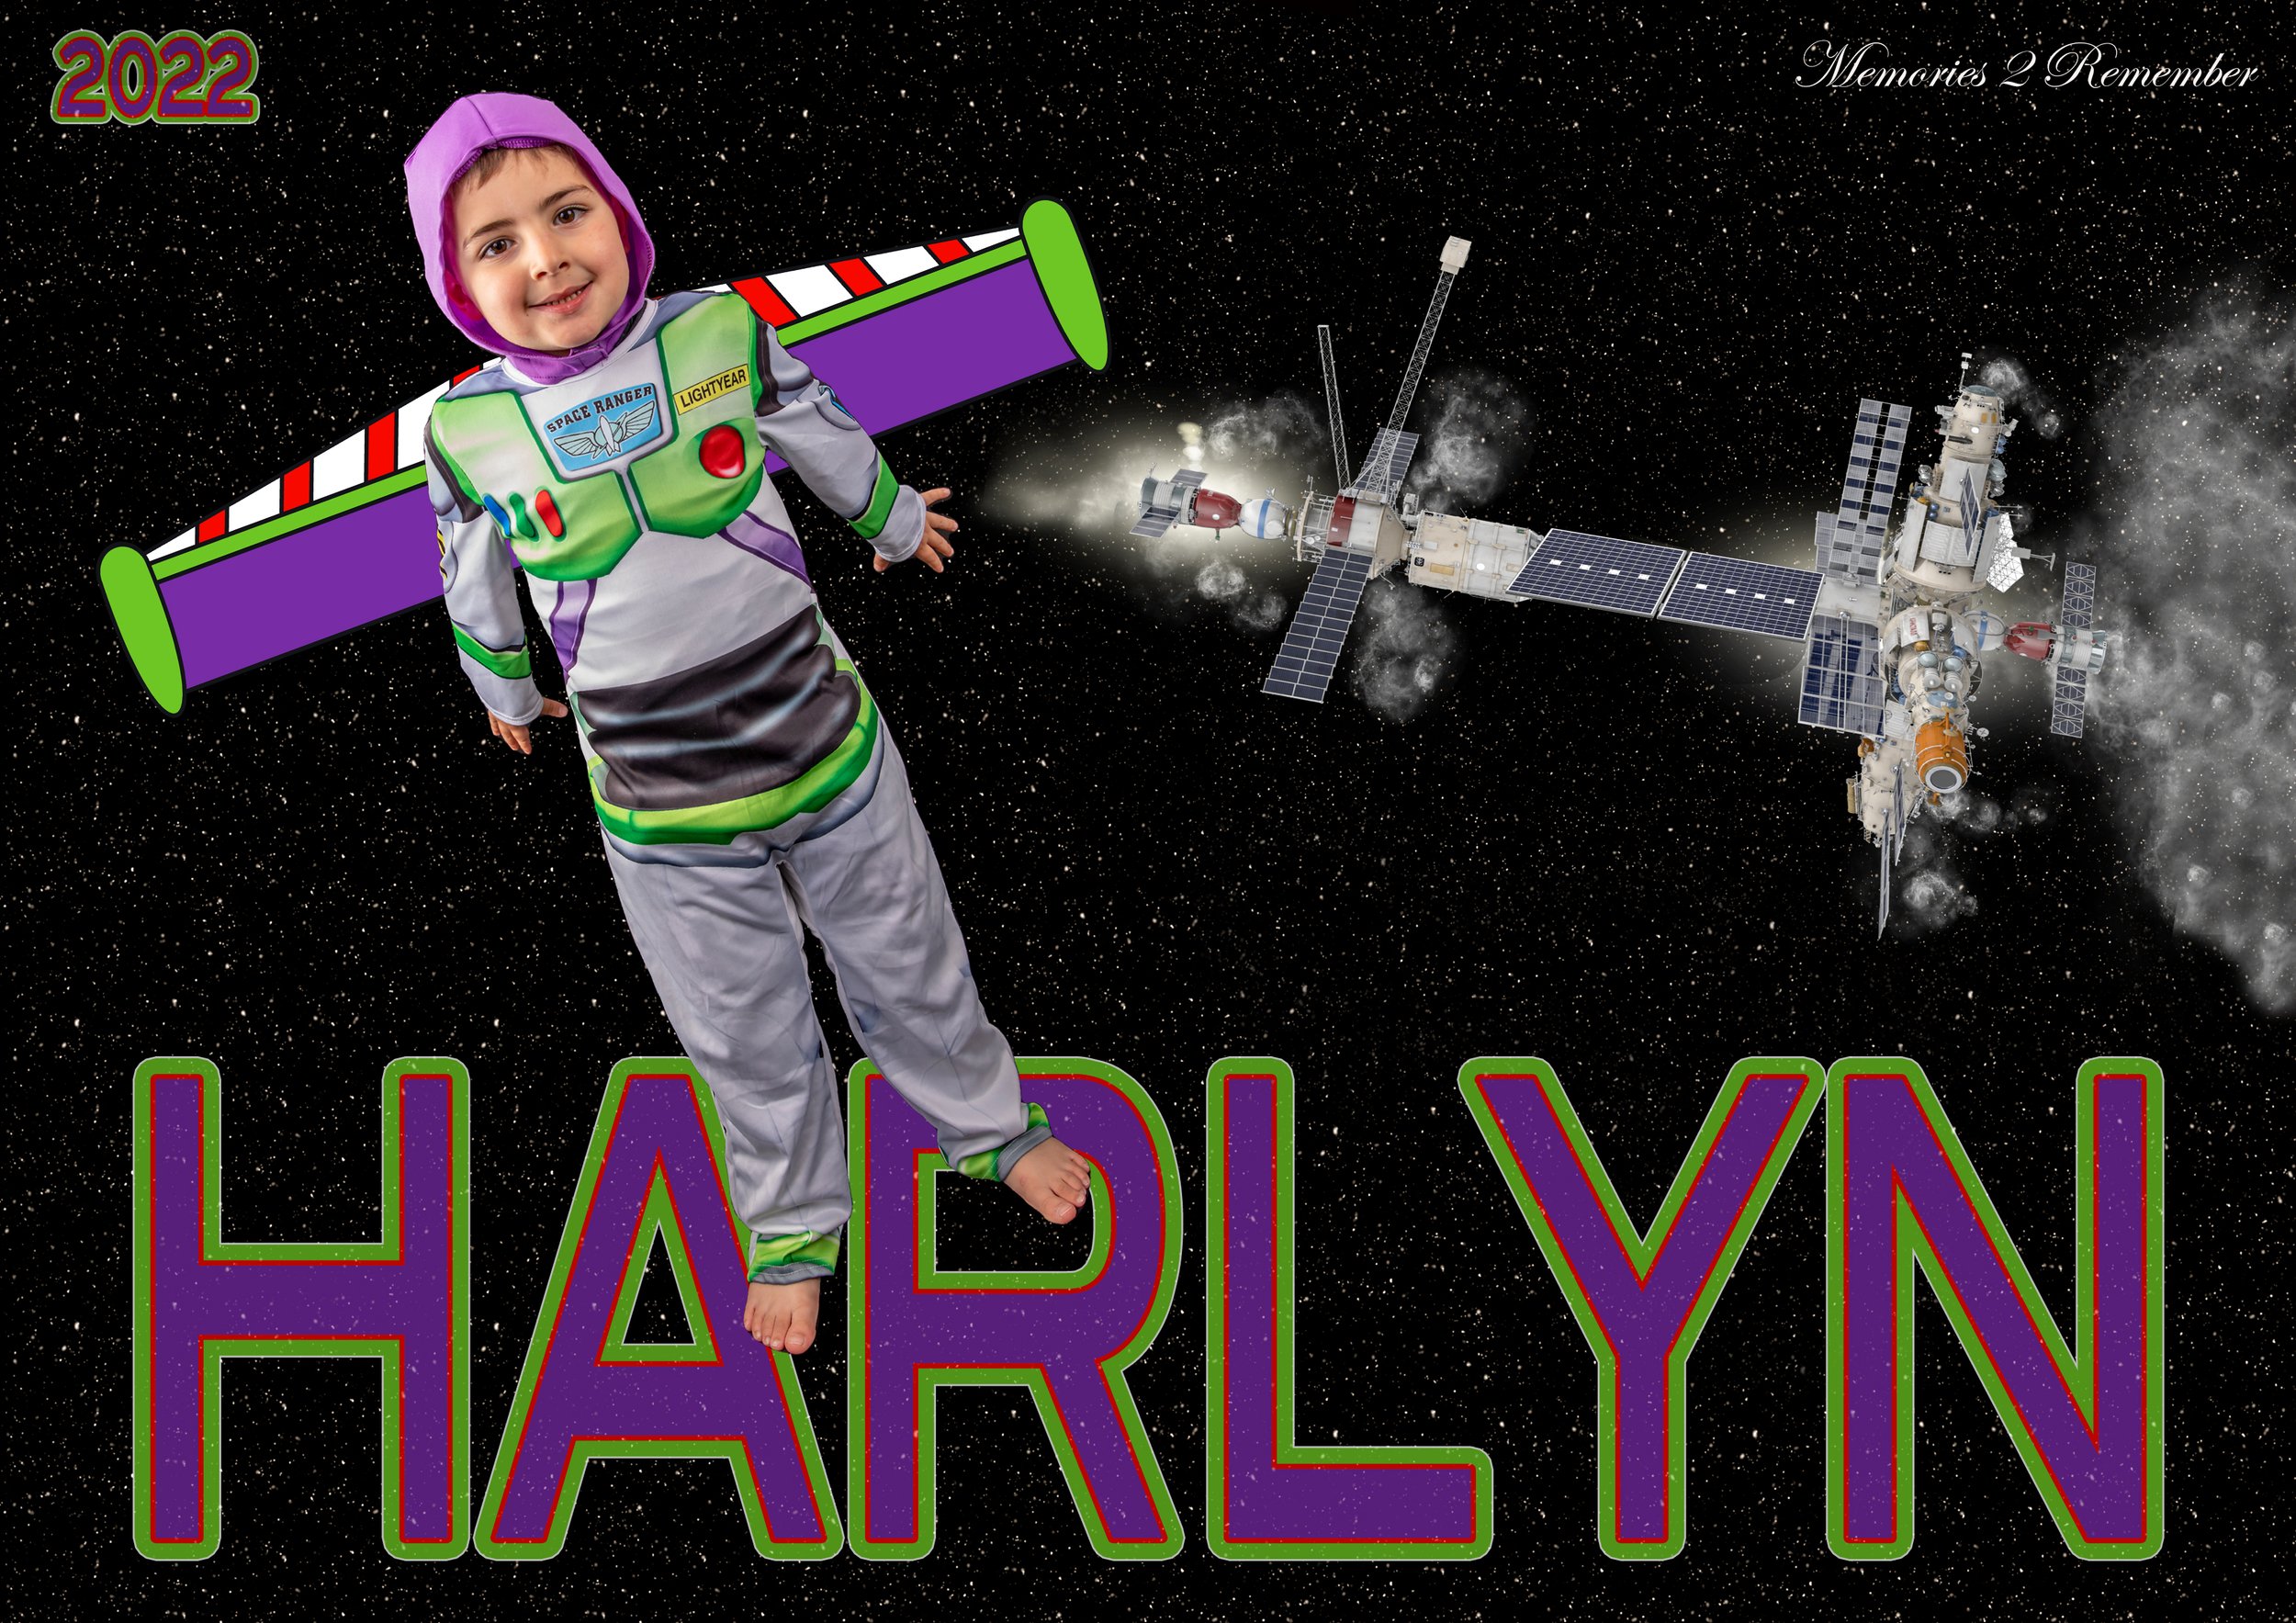 Harlyn - Buzz Lightyear A4.jpg